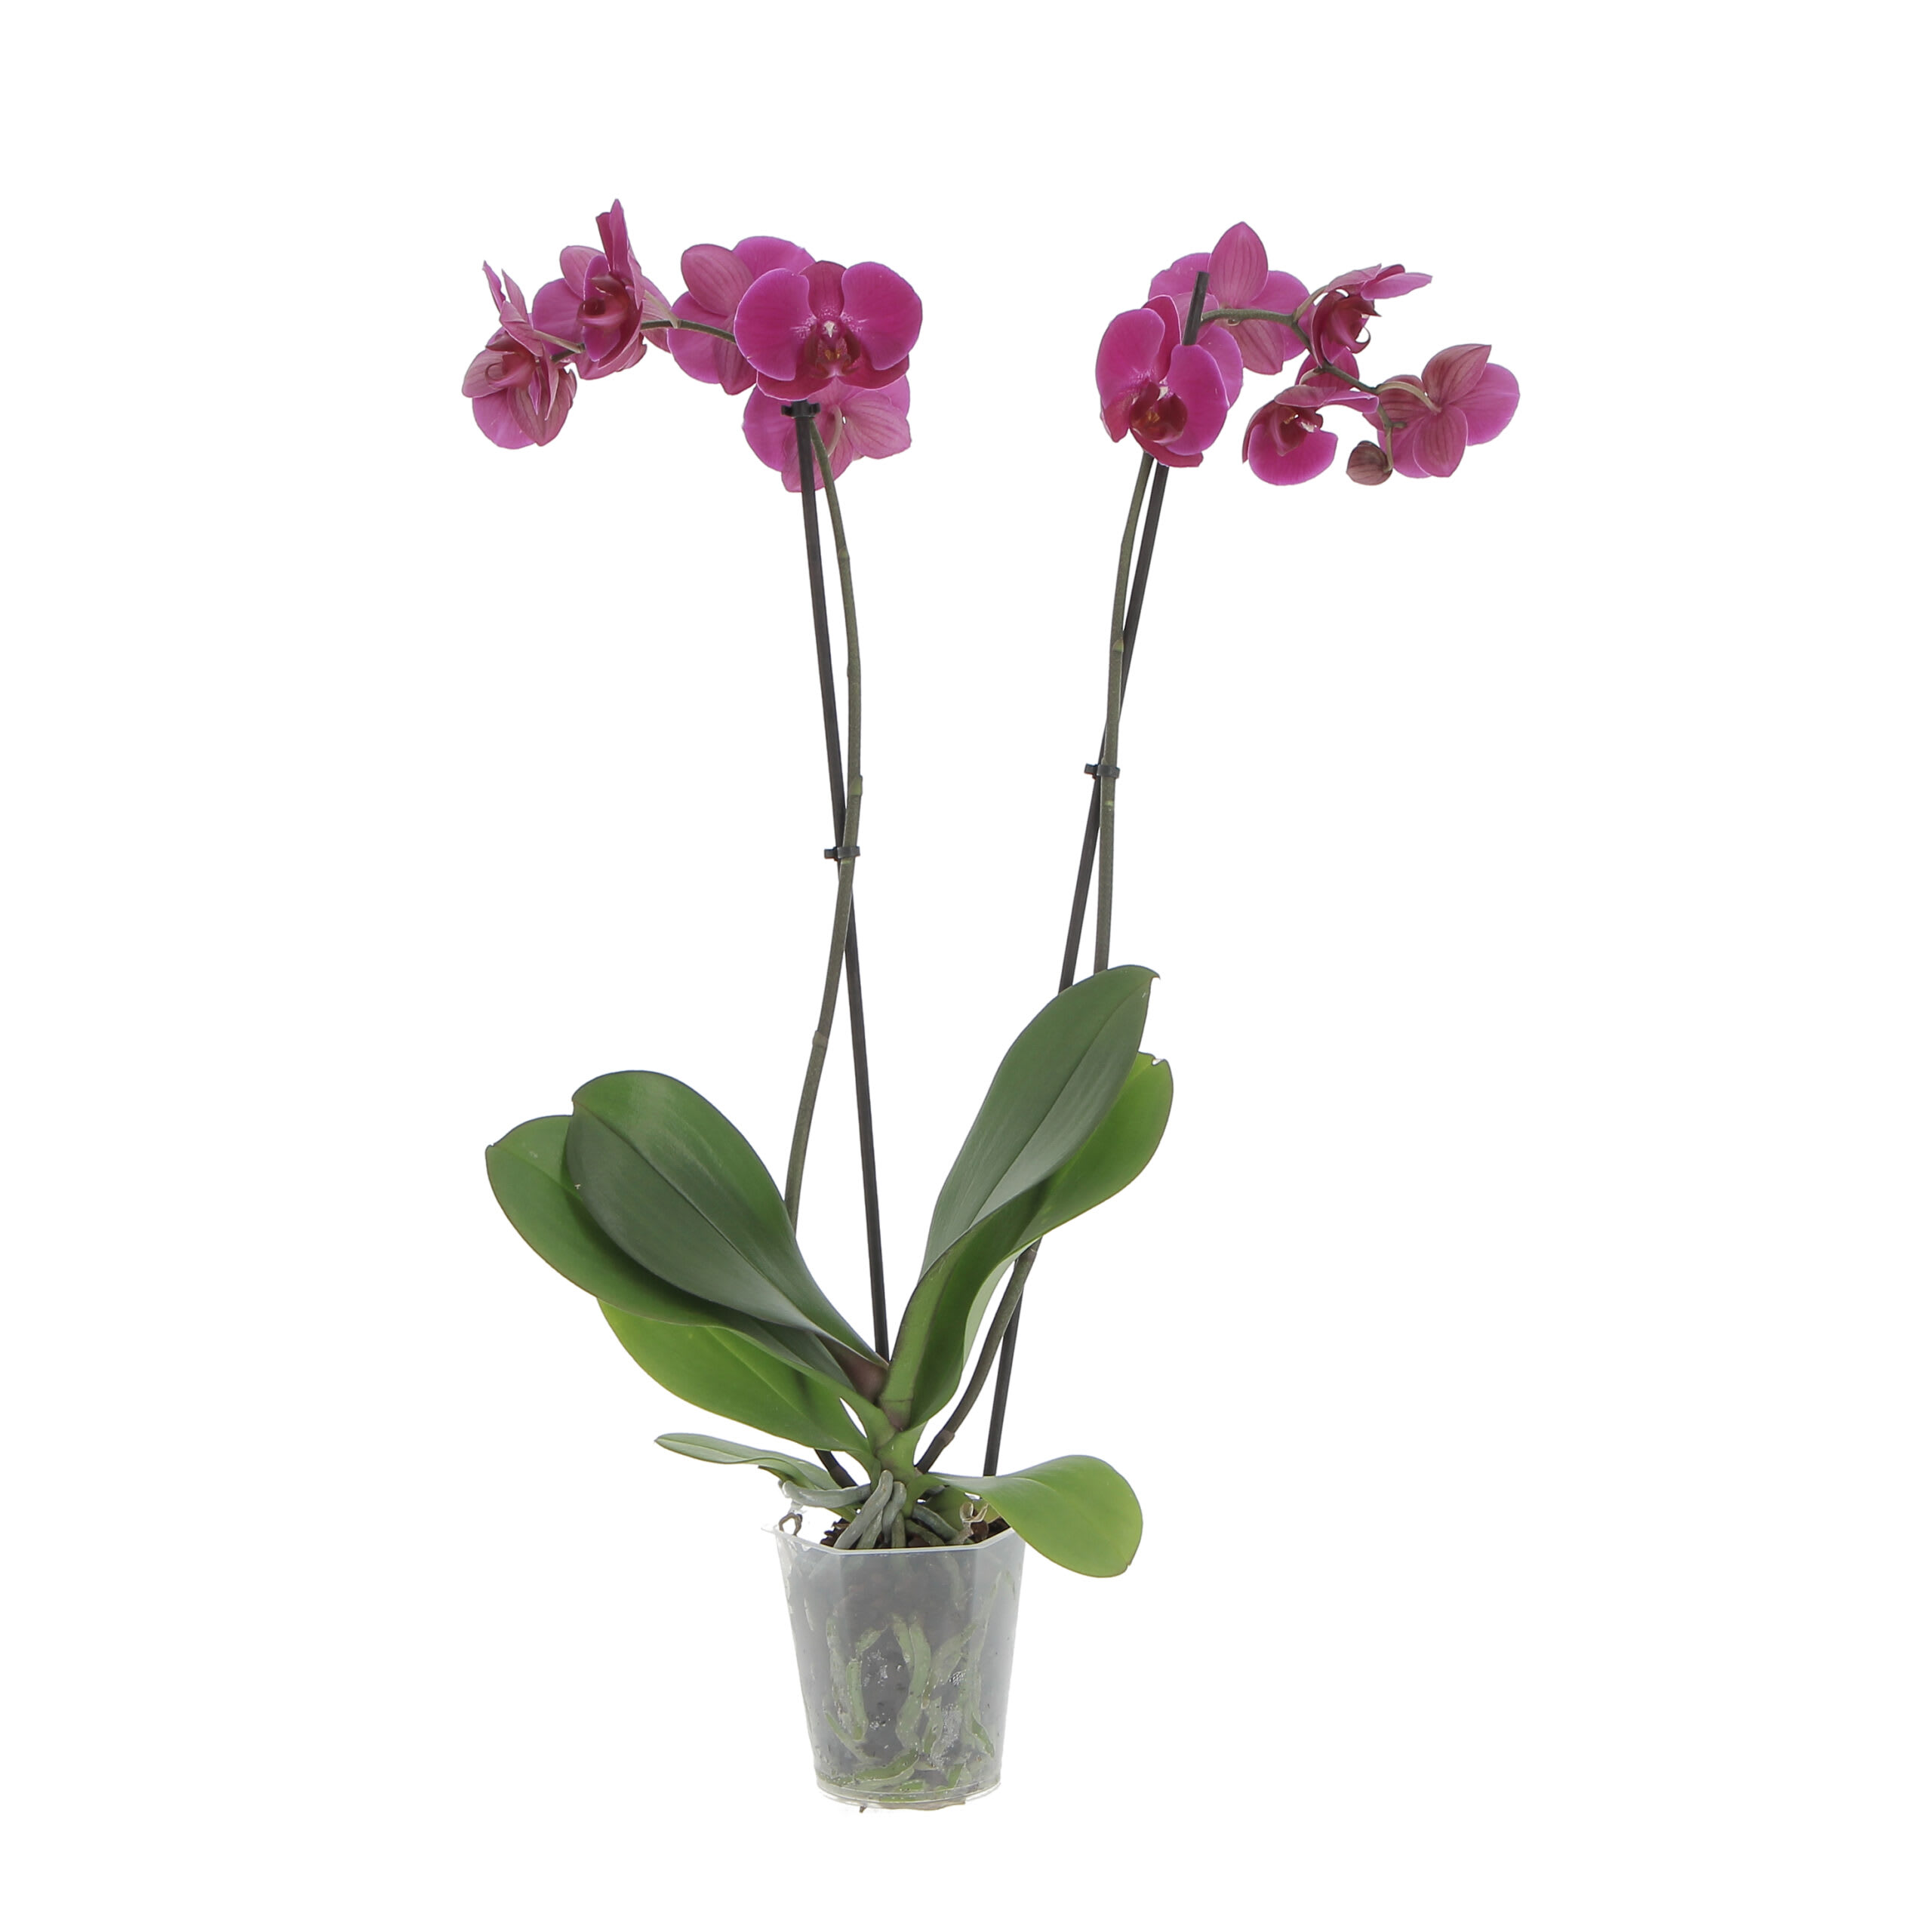 https://medias.maisonsdumonde.com/images/f_auto,q_auto/v1/mkp/M22175722_1/orchidea-phalaenopsis-fucsia-pianta-vera-h-60-70-cm-vaso-oe-12-cm.jpg